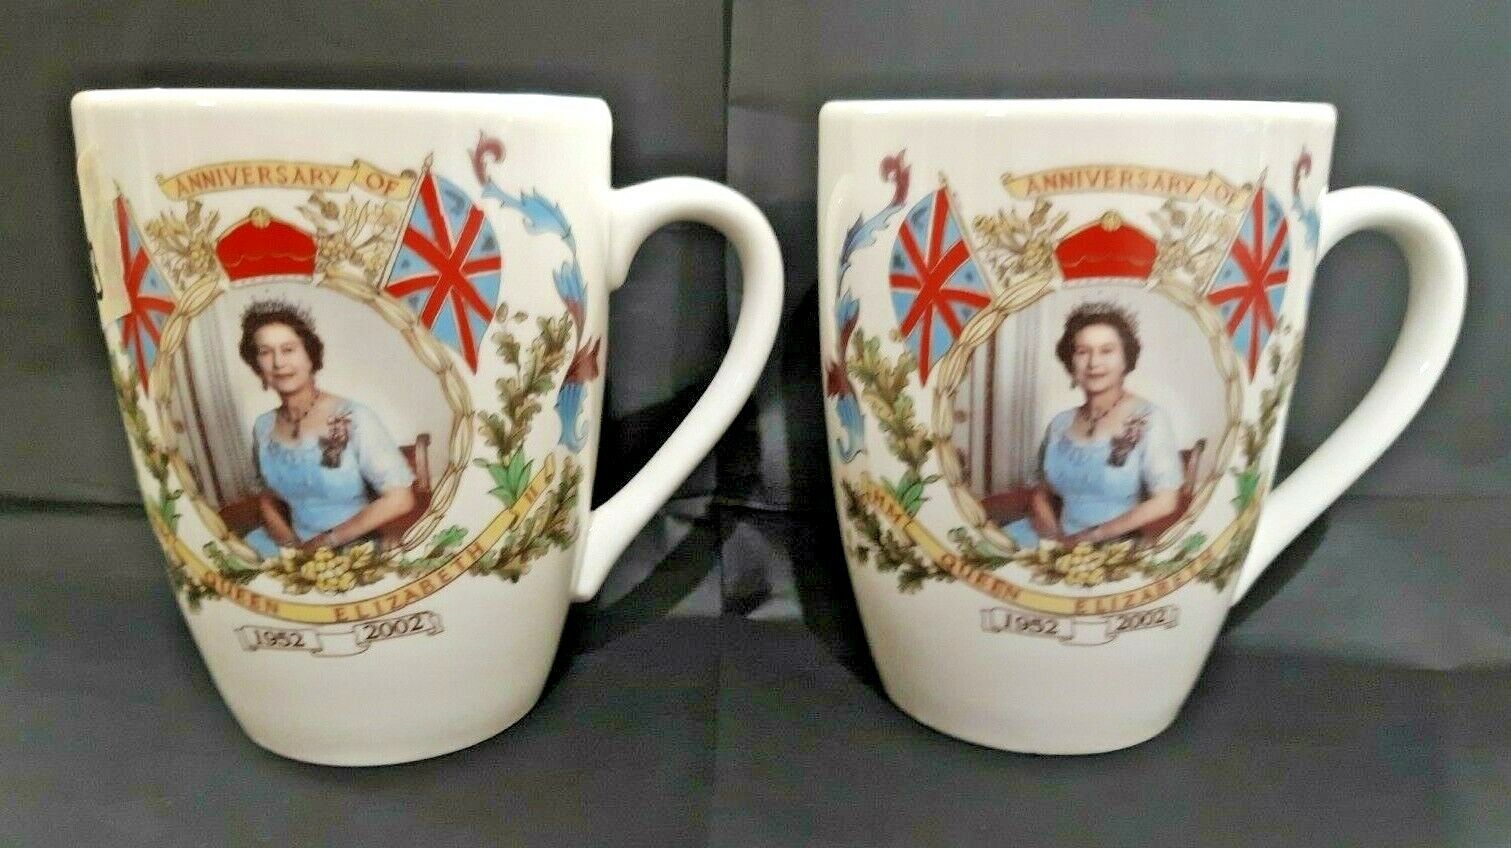  1952-2002 Anniversary of HM Queen Elizabeth Porcelain Coffee Cup